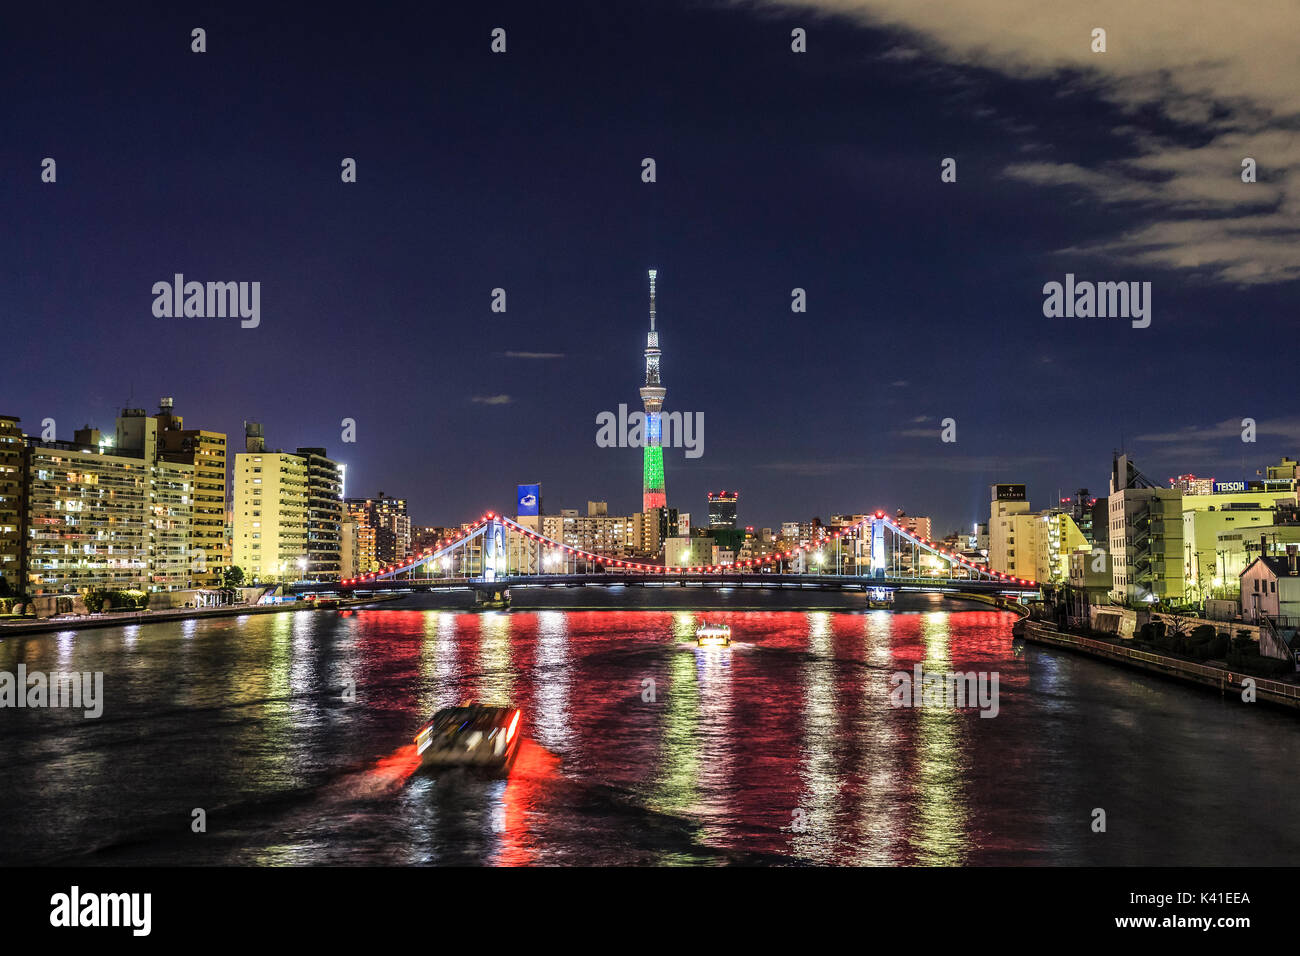 Illuminated Tokyo Skytree Tower in Tokyo, Japan Stock Photo